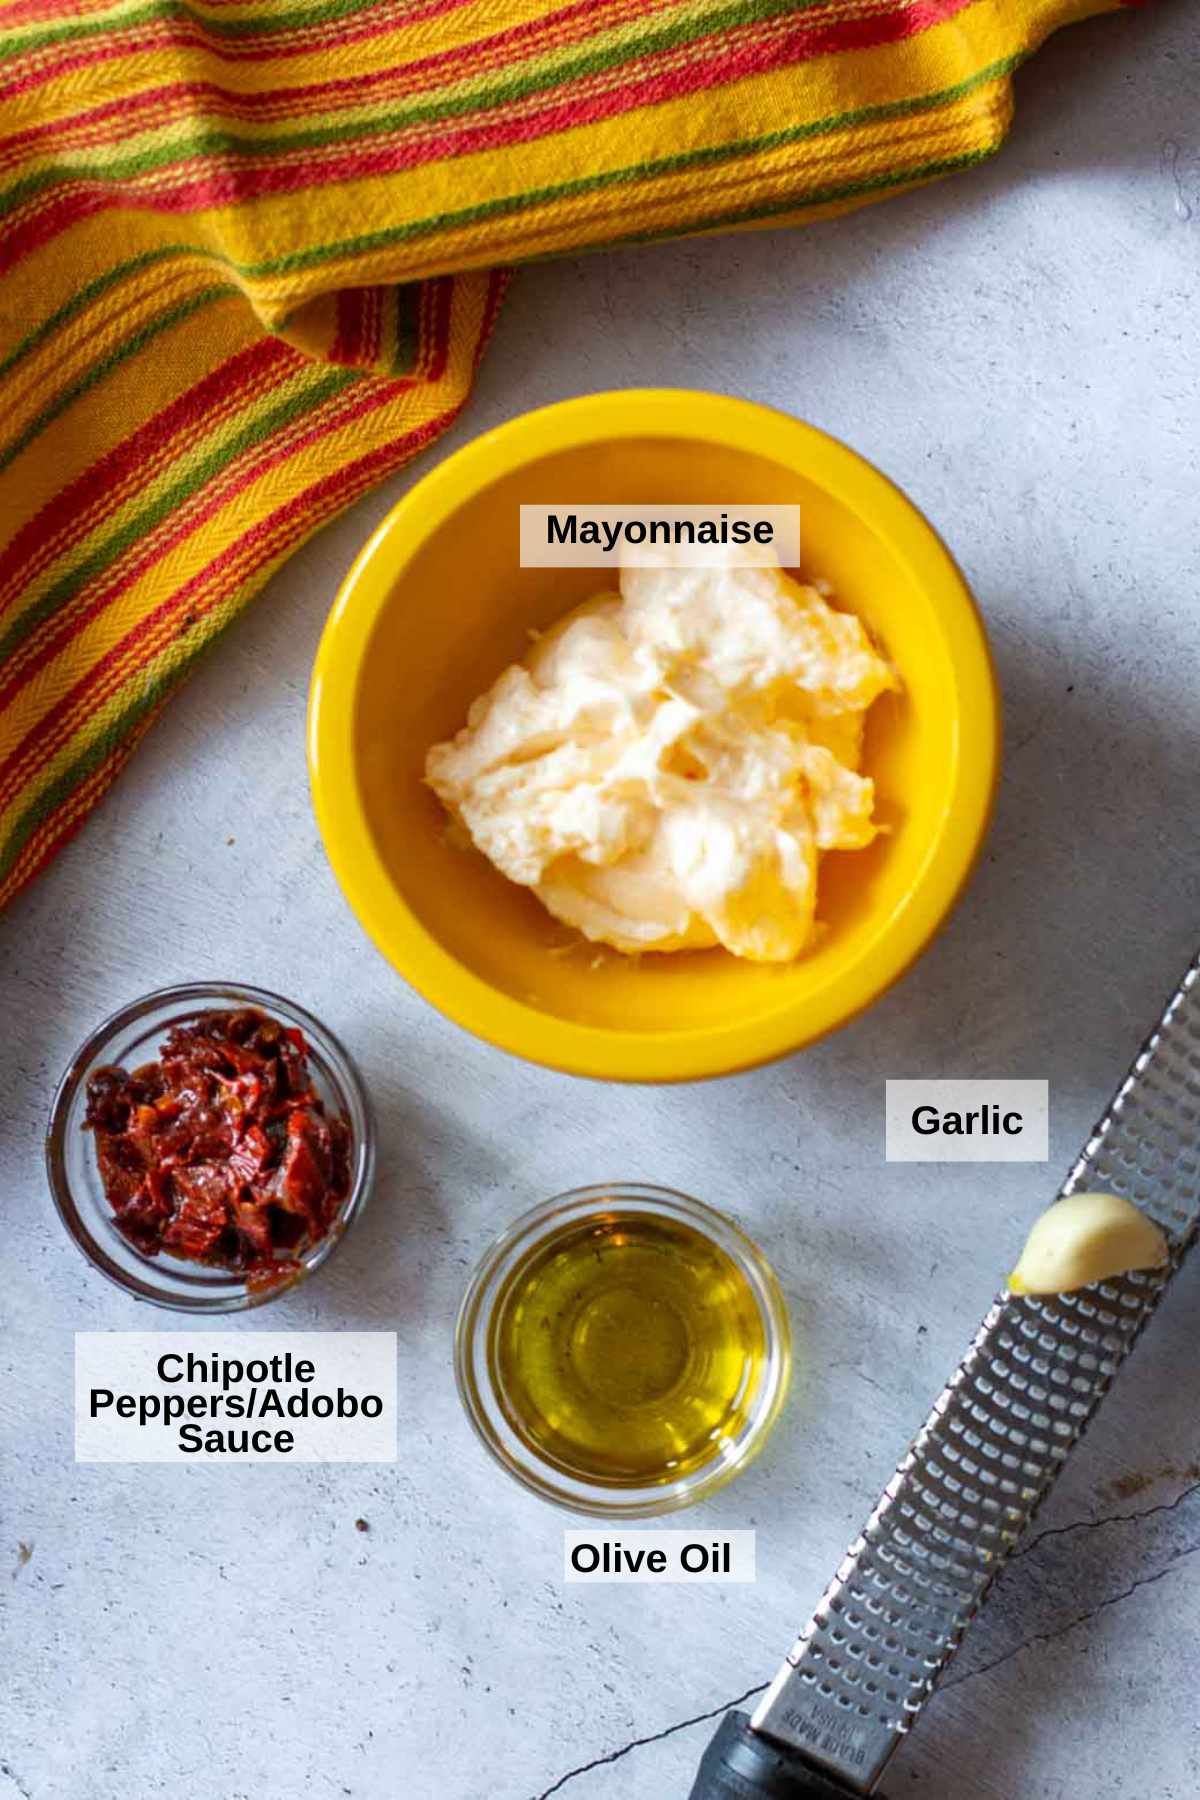 Ingredients to make chipotle mayo.